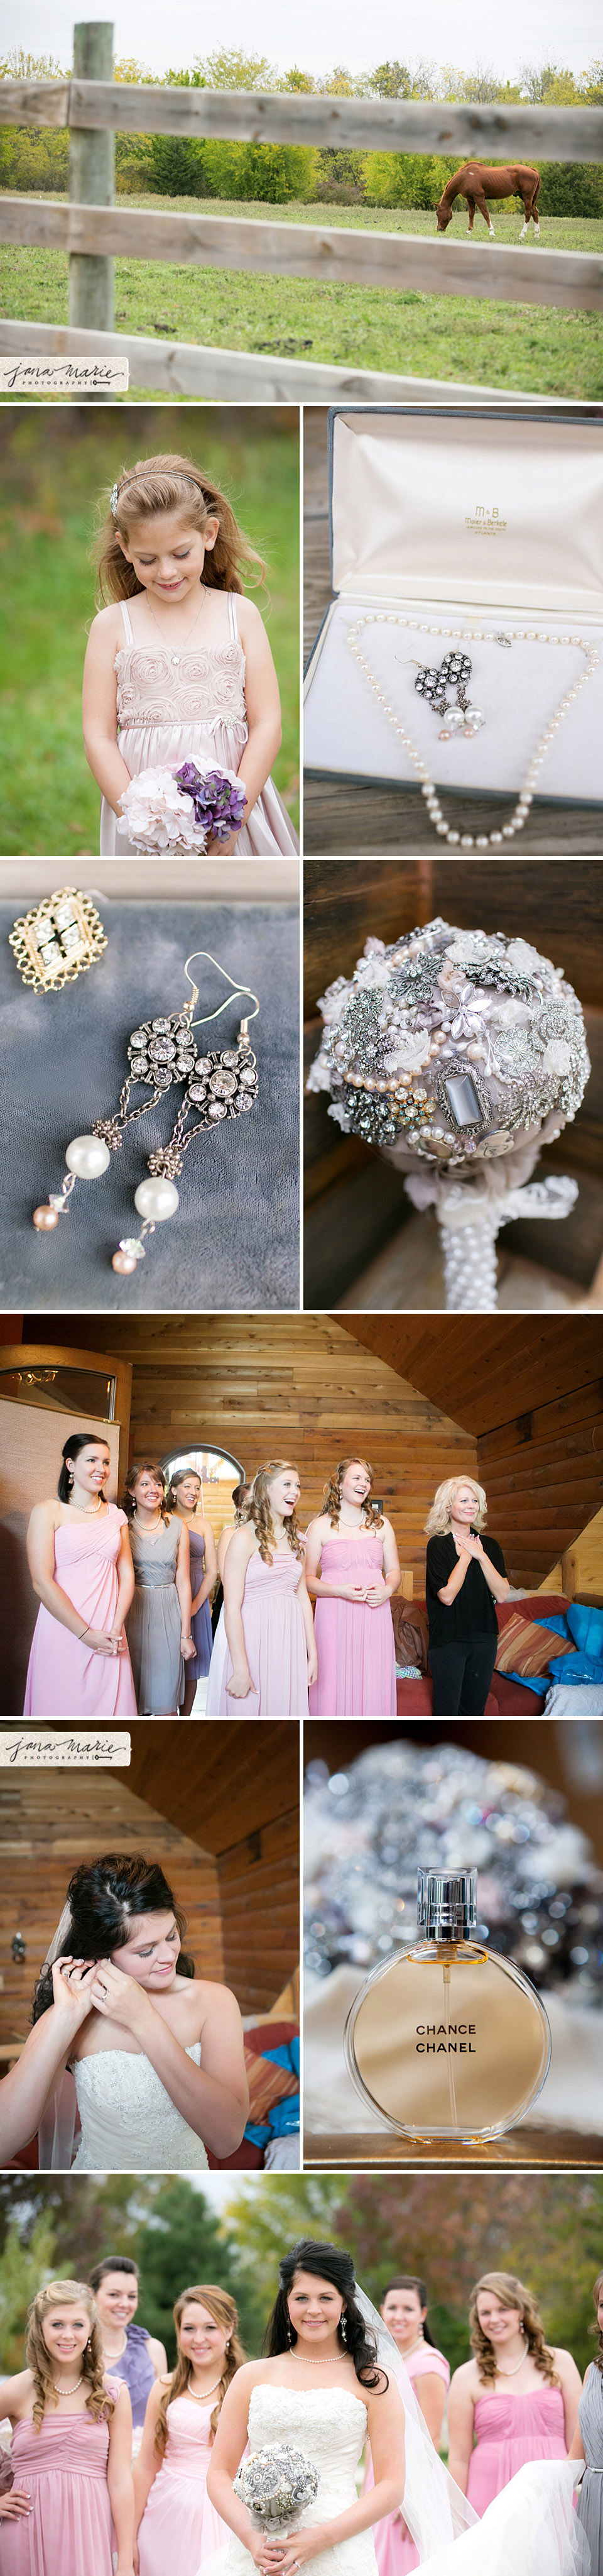 Independence Missouri wedding, Farm reception, Vintage inspired, DIY bouquet, Shipley, Jana Marler